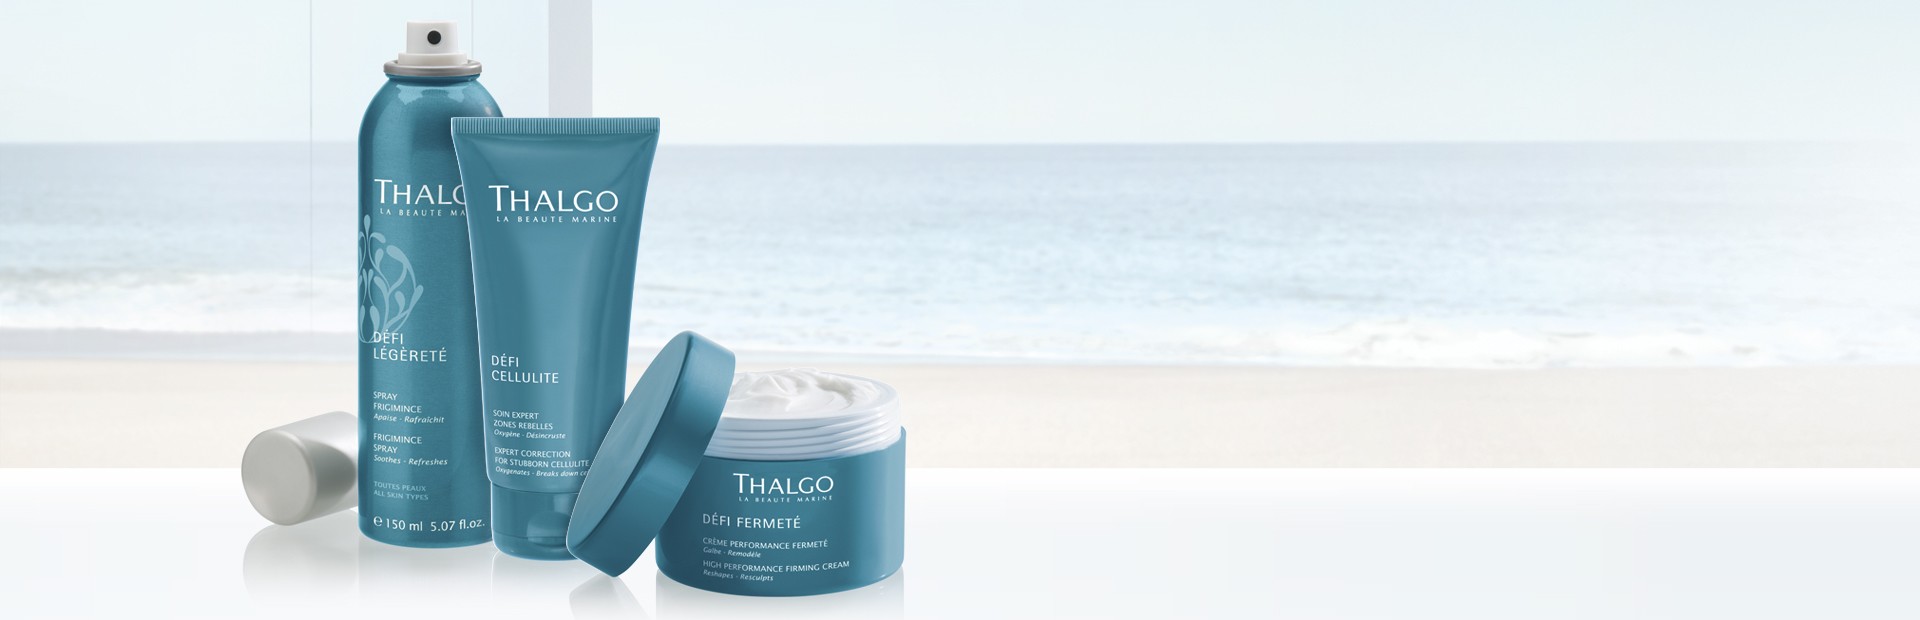 Thalgo, Bust & Décolleté - Thalgo, Slimming, Défi Fermeté, Marine-based  products and treatments, Thalgo spas and salons